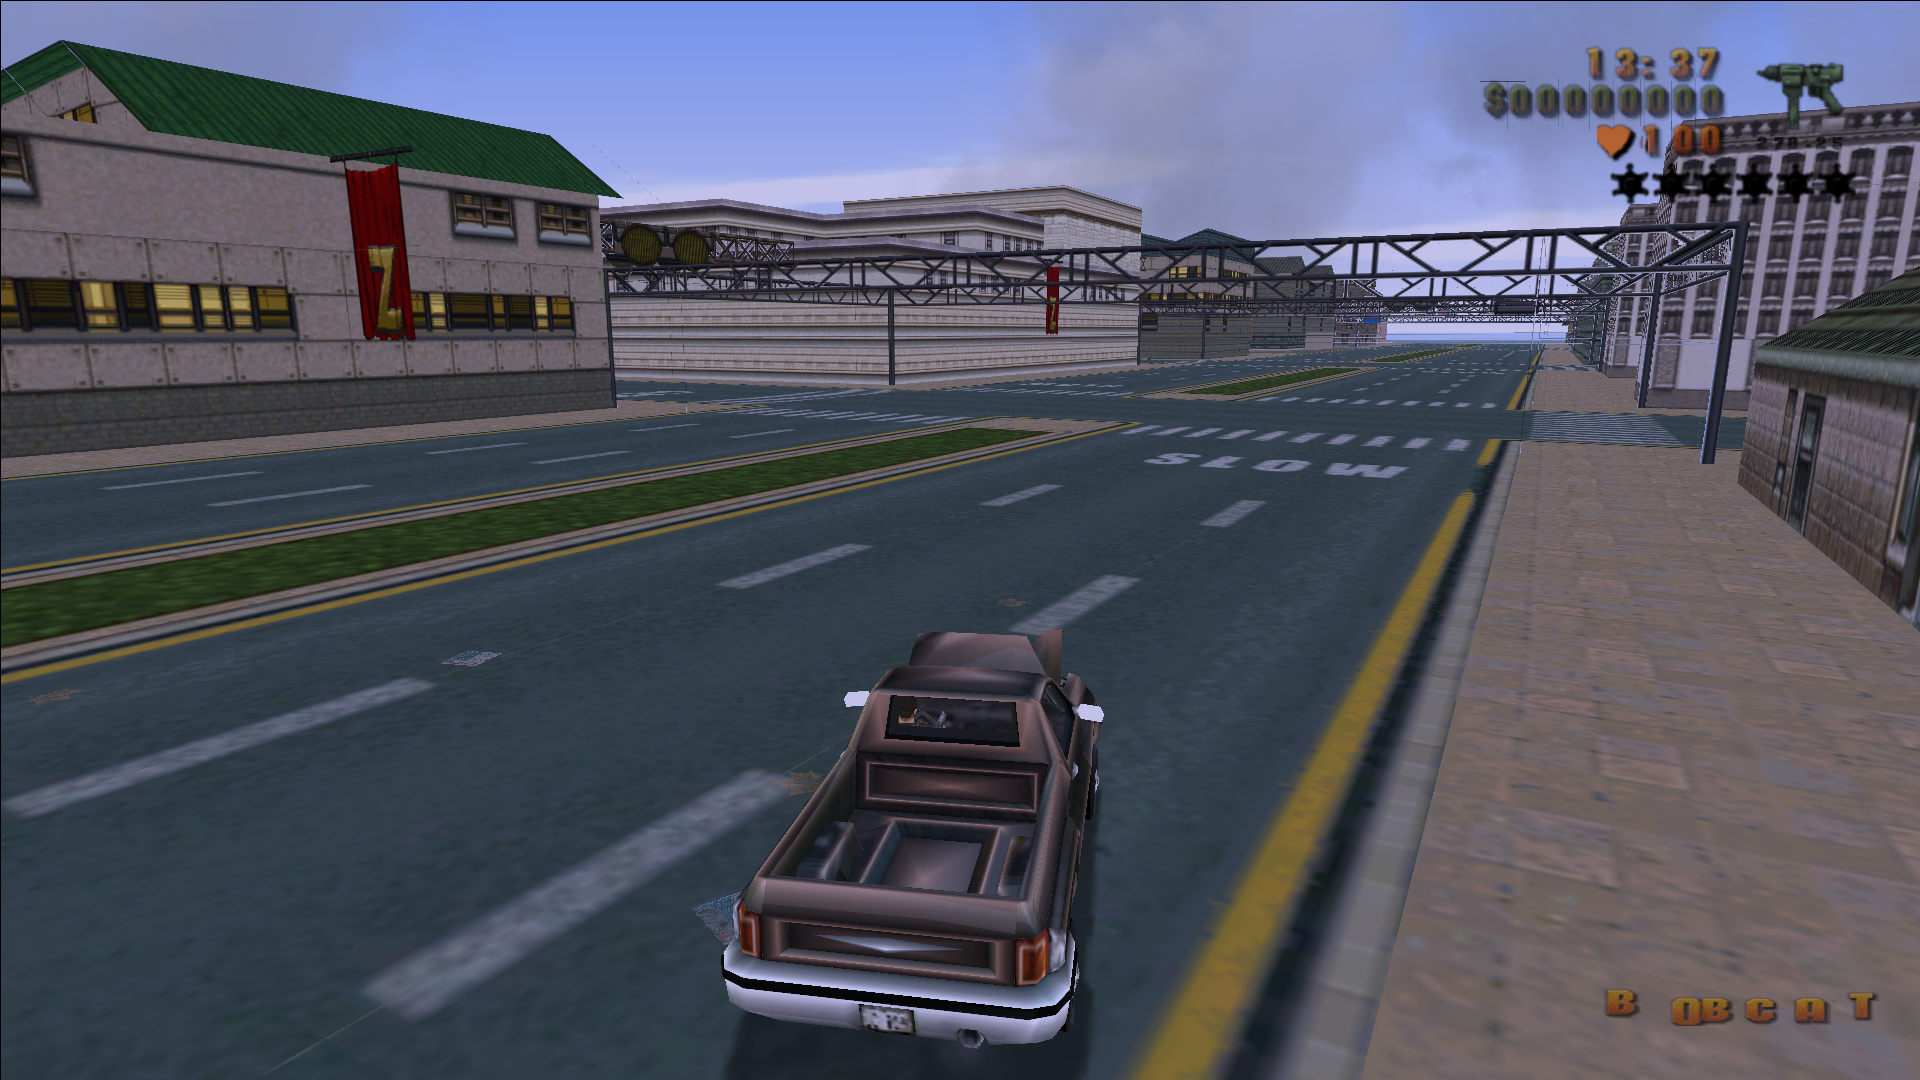 Kleverig Toerist vals GTA 2 map in V1.73 image - GTA III: 1999 mod for Grand Theft Auto III - Mod  DB